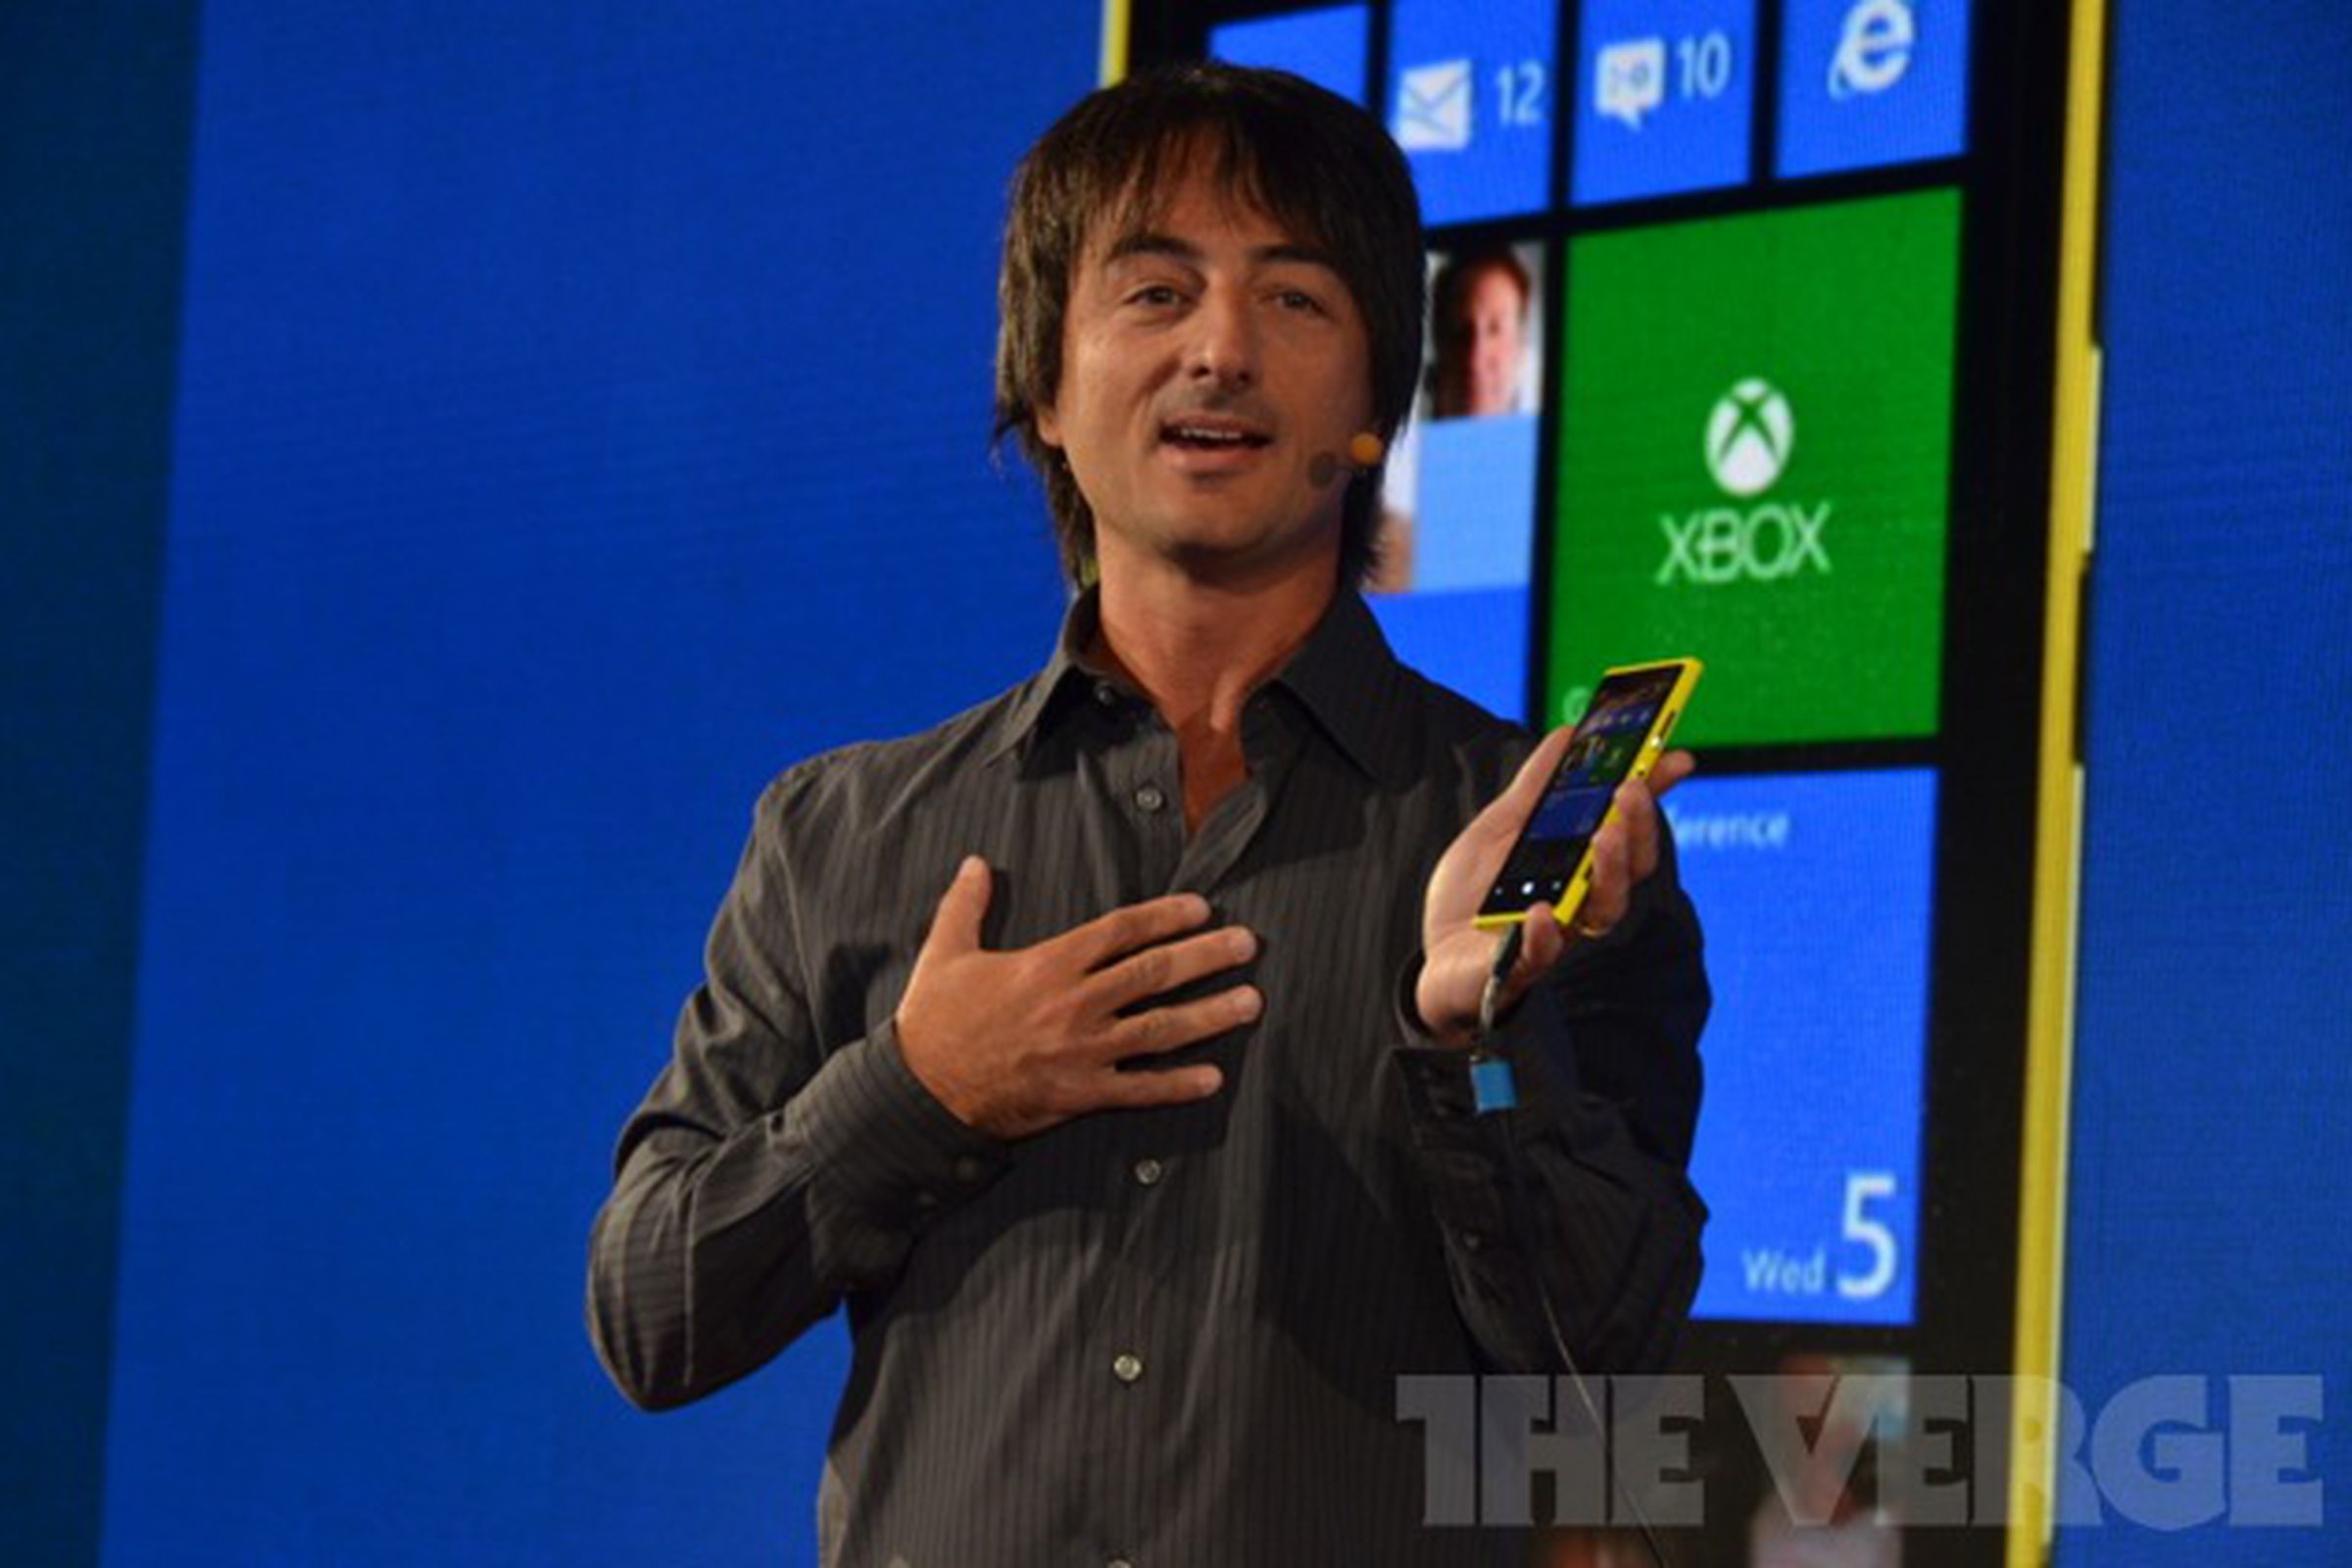 Microsoft's Joe Belfiore with the Nokia Lumia 920